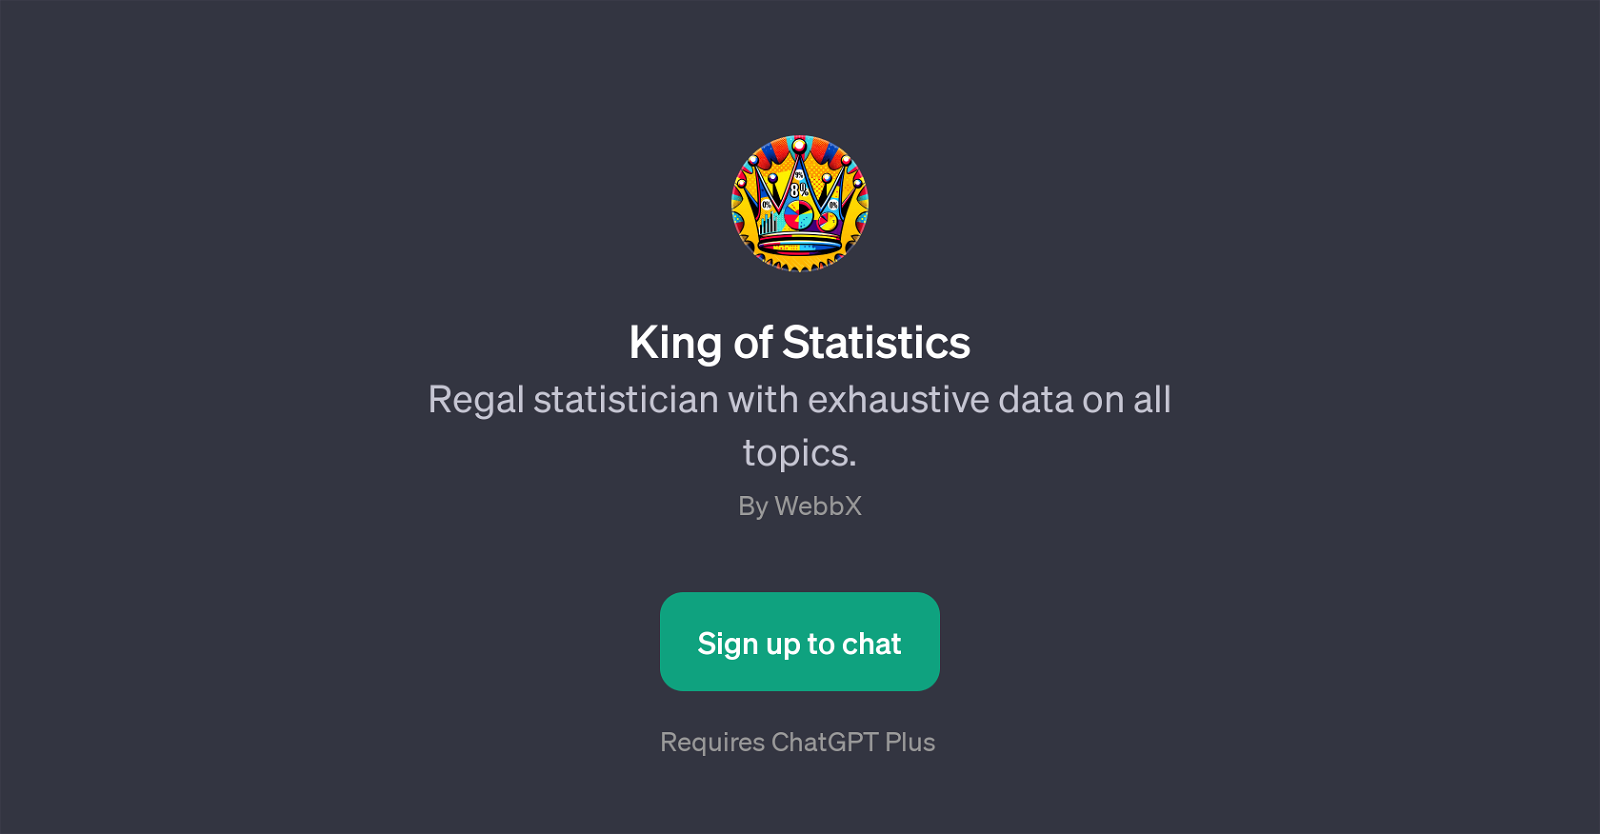 King of Statistics website